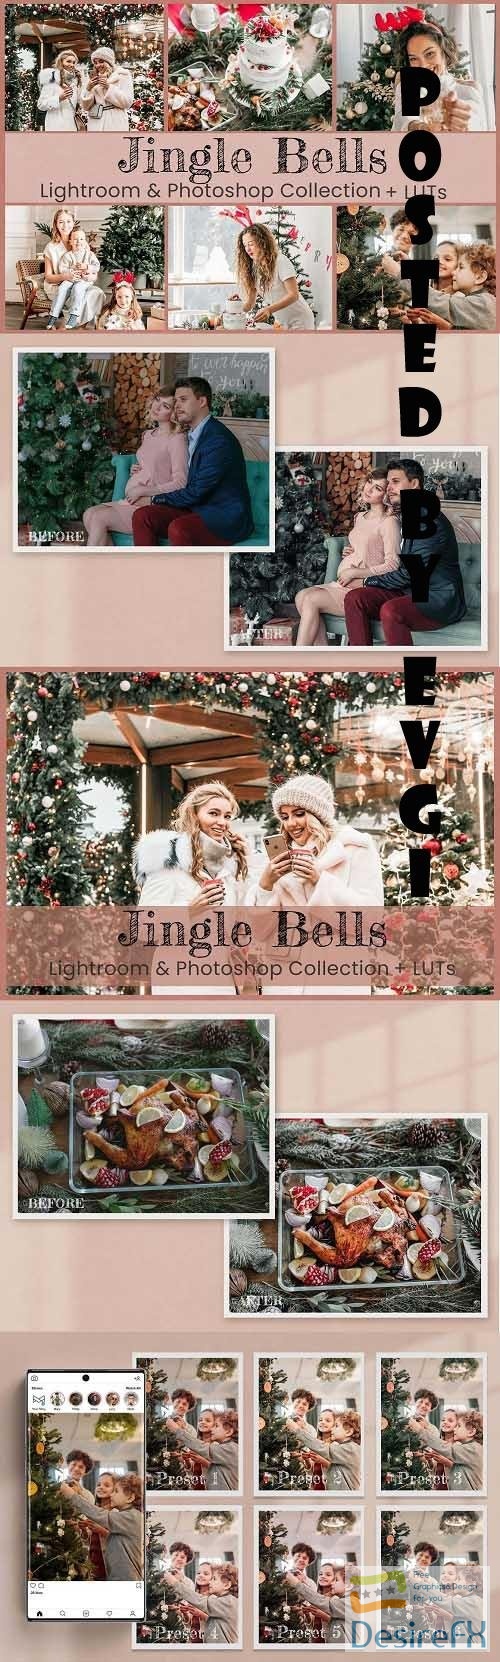 Jingle Bells Lightroom Photoshop LUT - 6562871